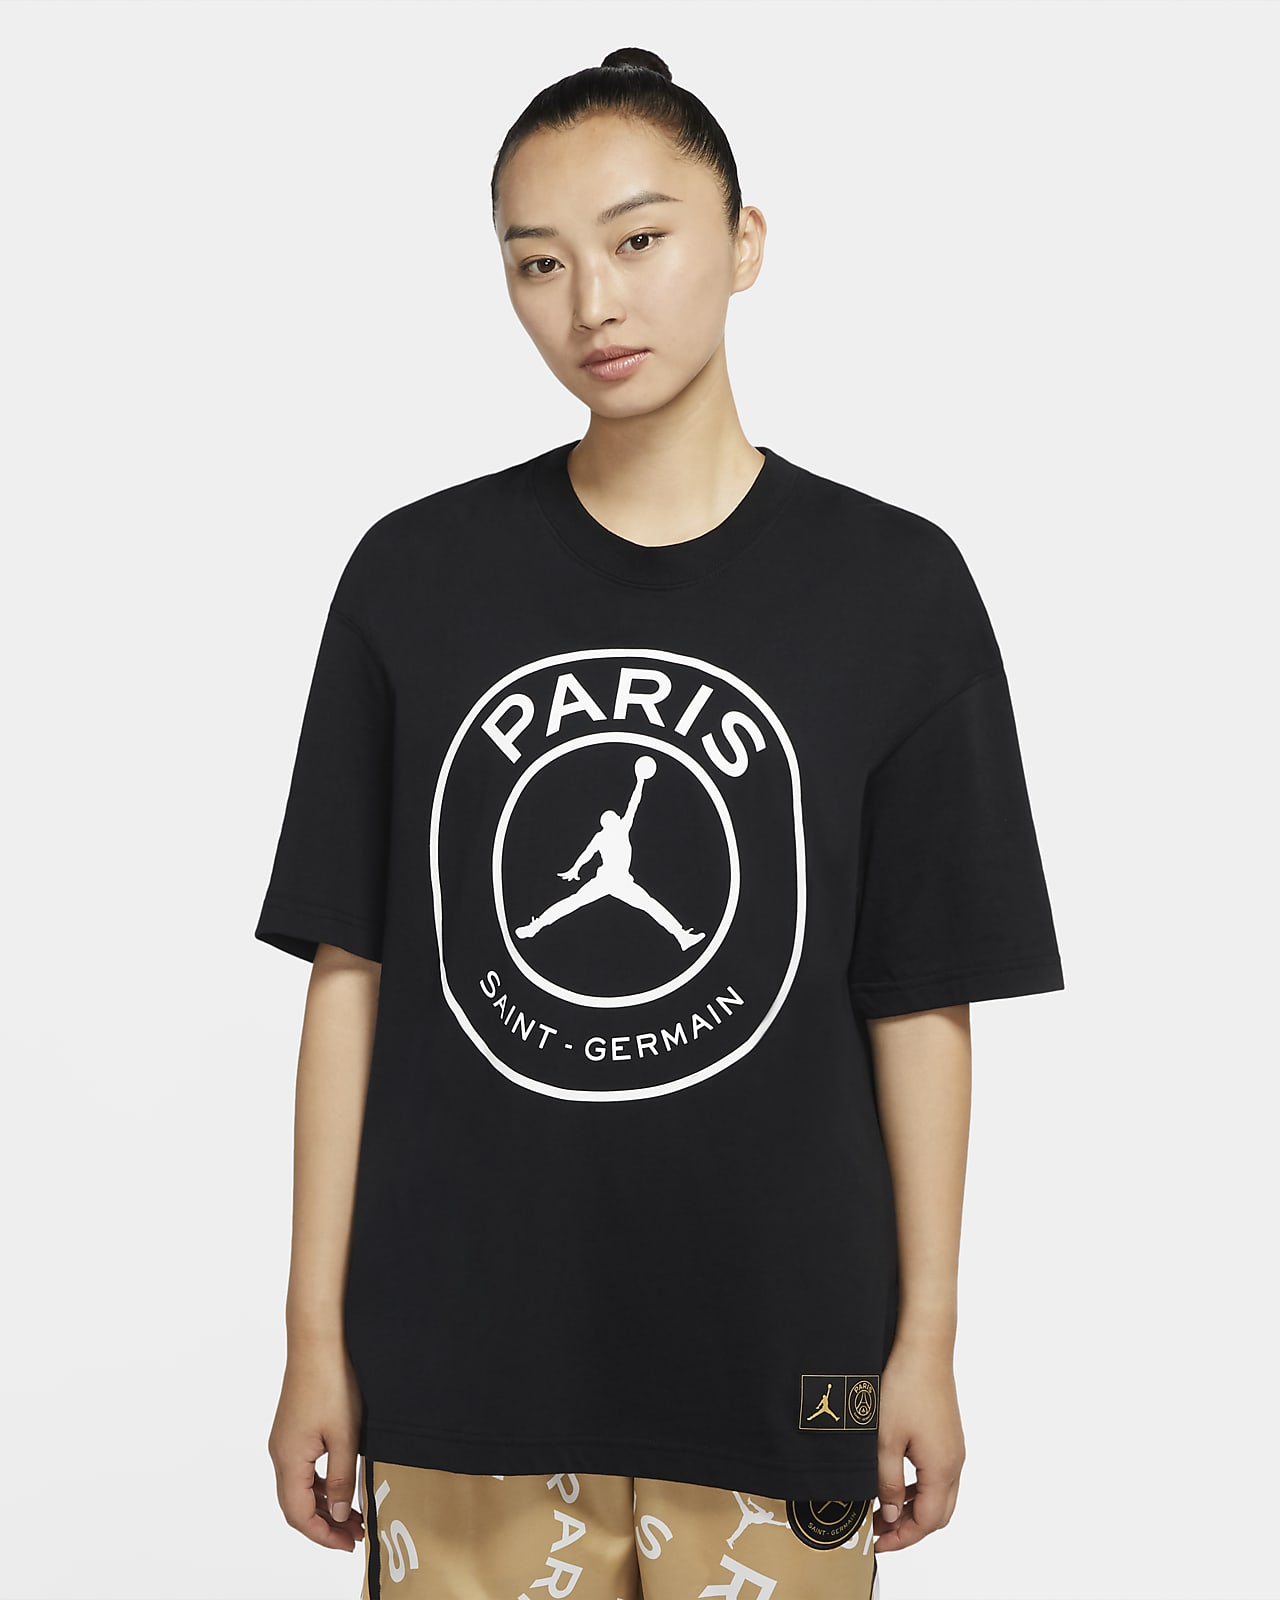 Nike公式 パリ サンジェルマン ウィメンズ オーバーサイズ Tシャツ オンラインストア 通販サイト